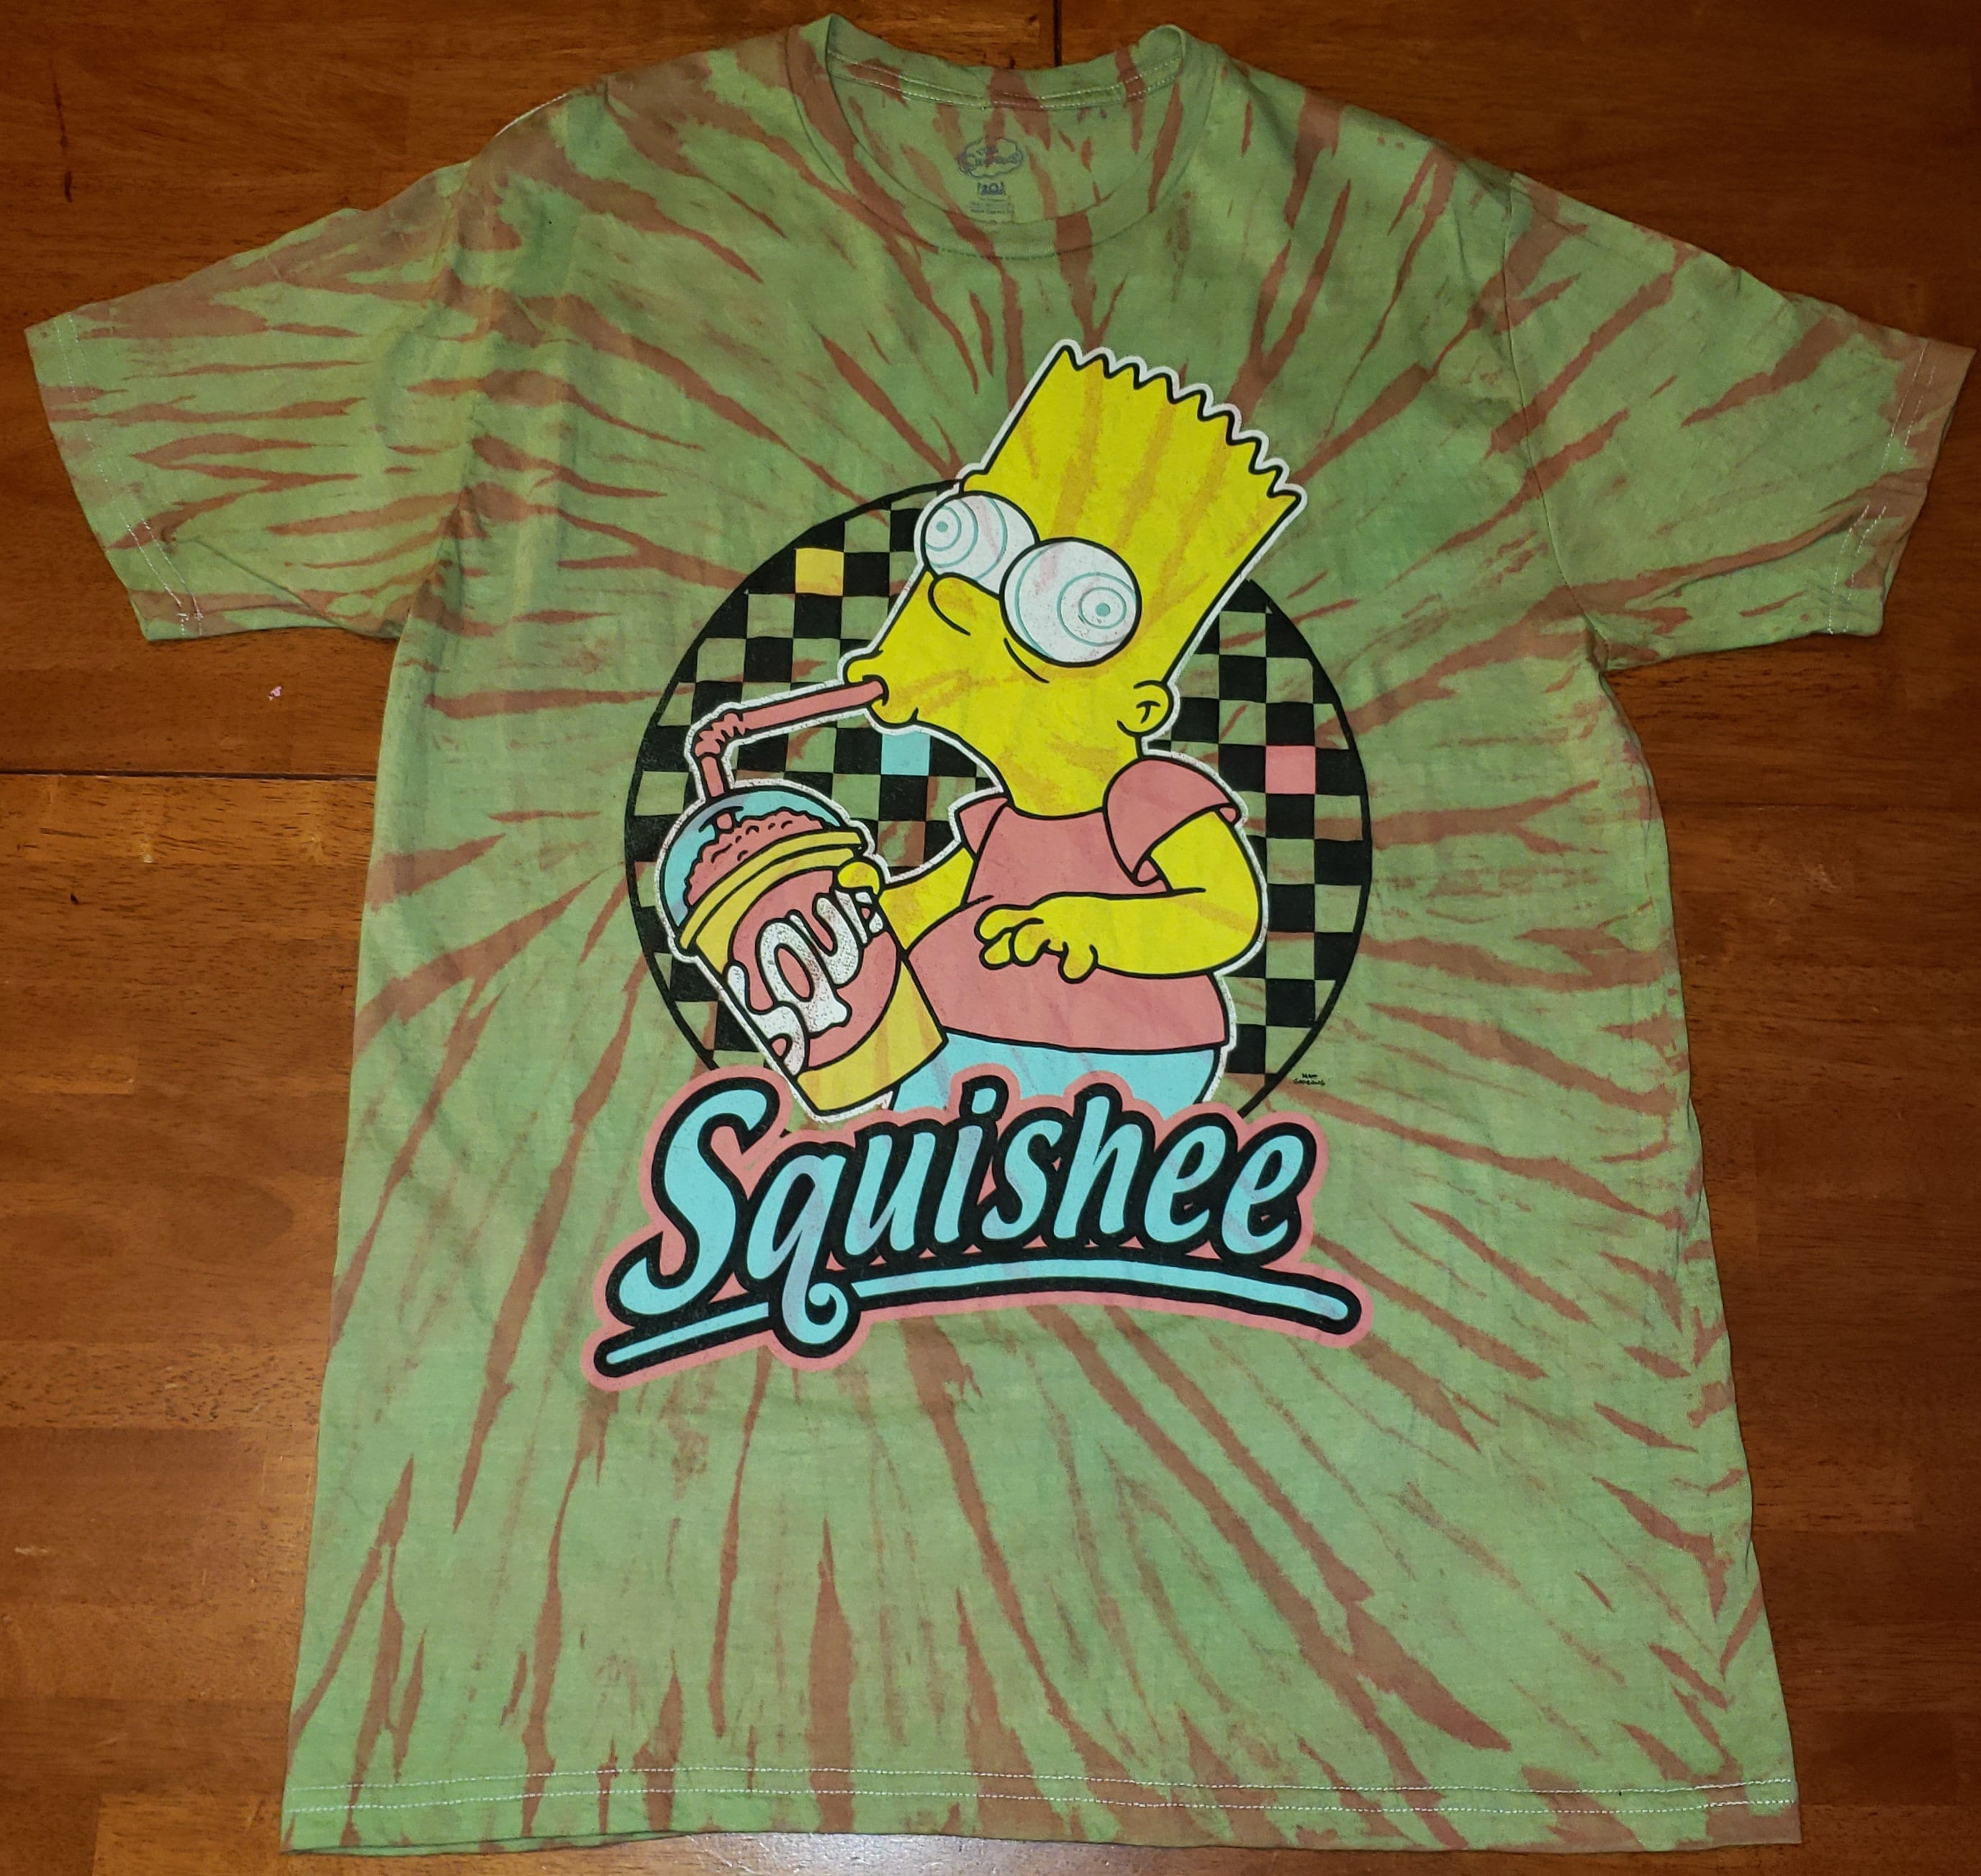 Grungeaesthetic Simpsons 90s Freetoedit - Aesthetic Bart Simpson